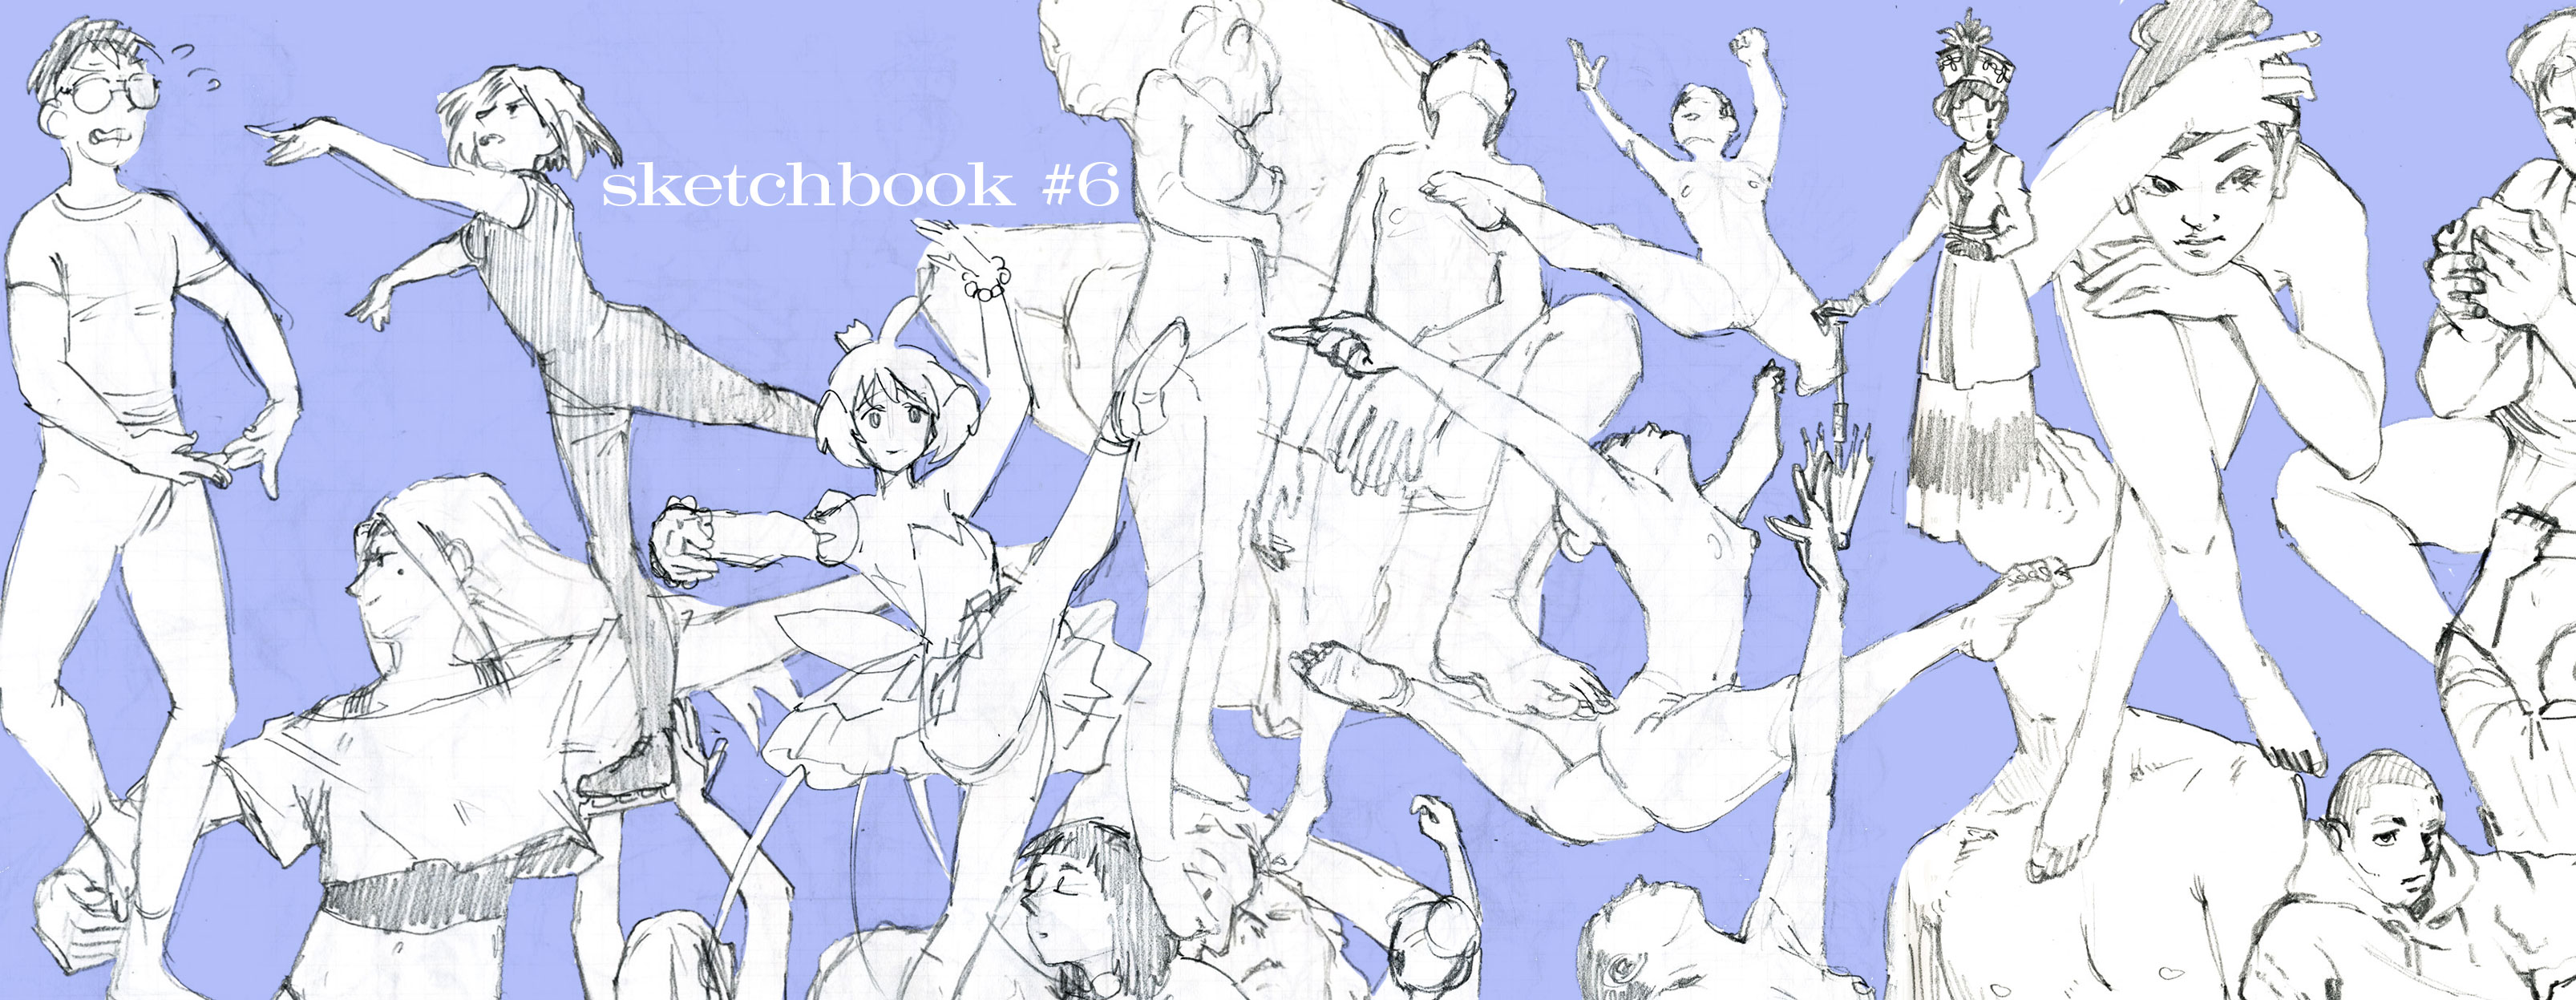 Sketchbook #6